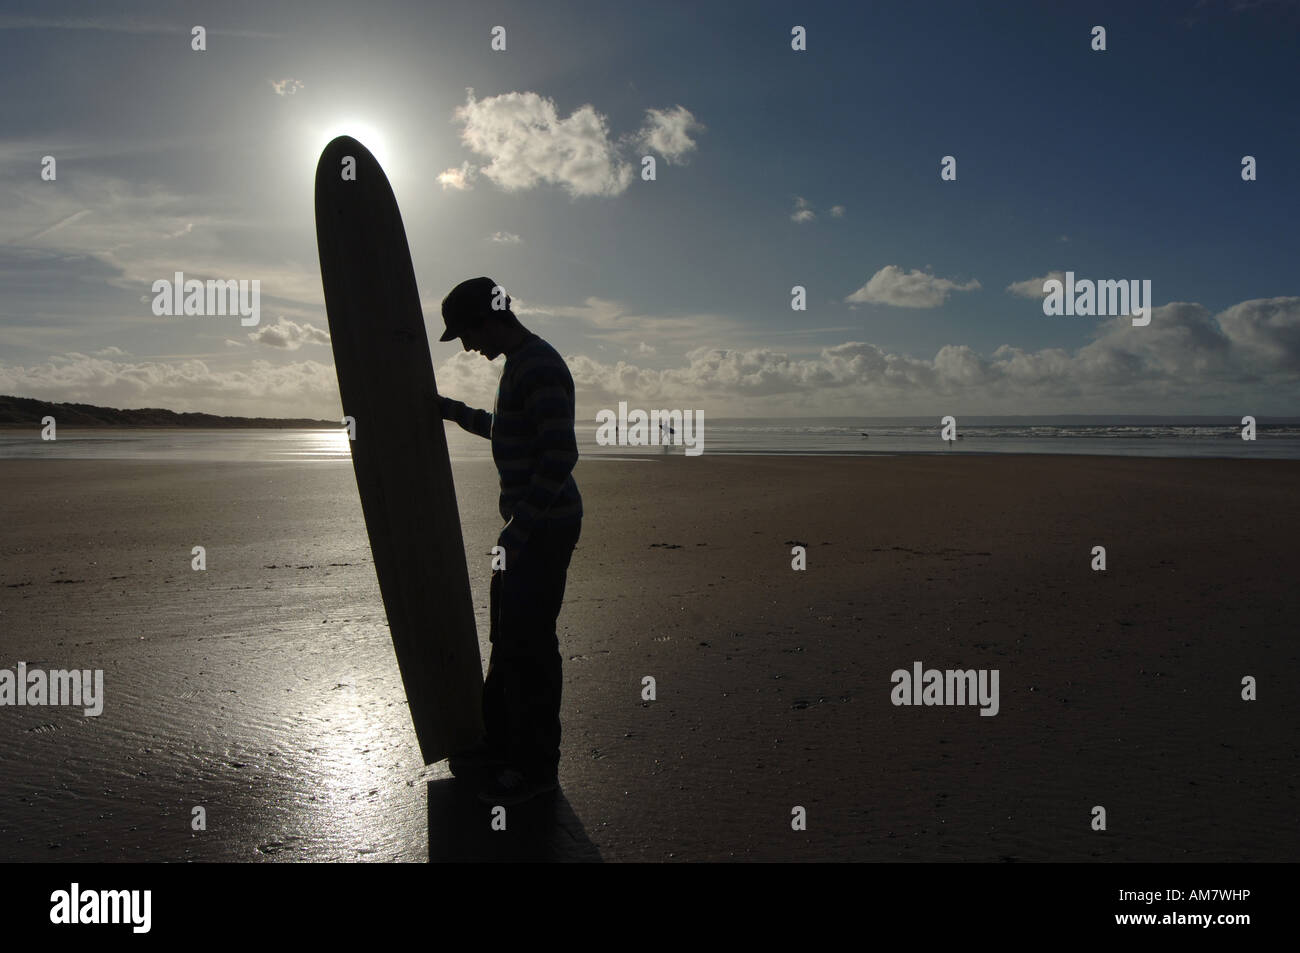 a surfer holding a tom wegener surfboard on the beach at Saunton Sands beach in North Devon UK. Stock Photo